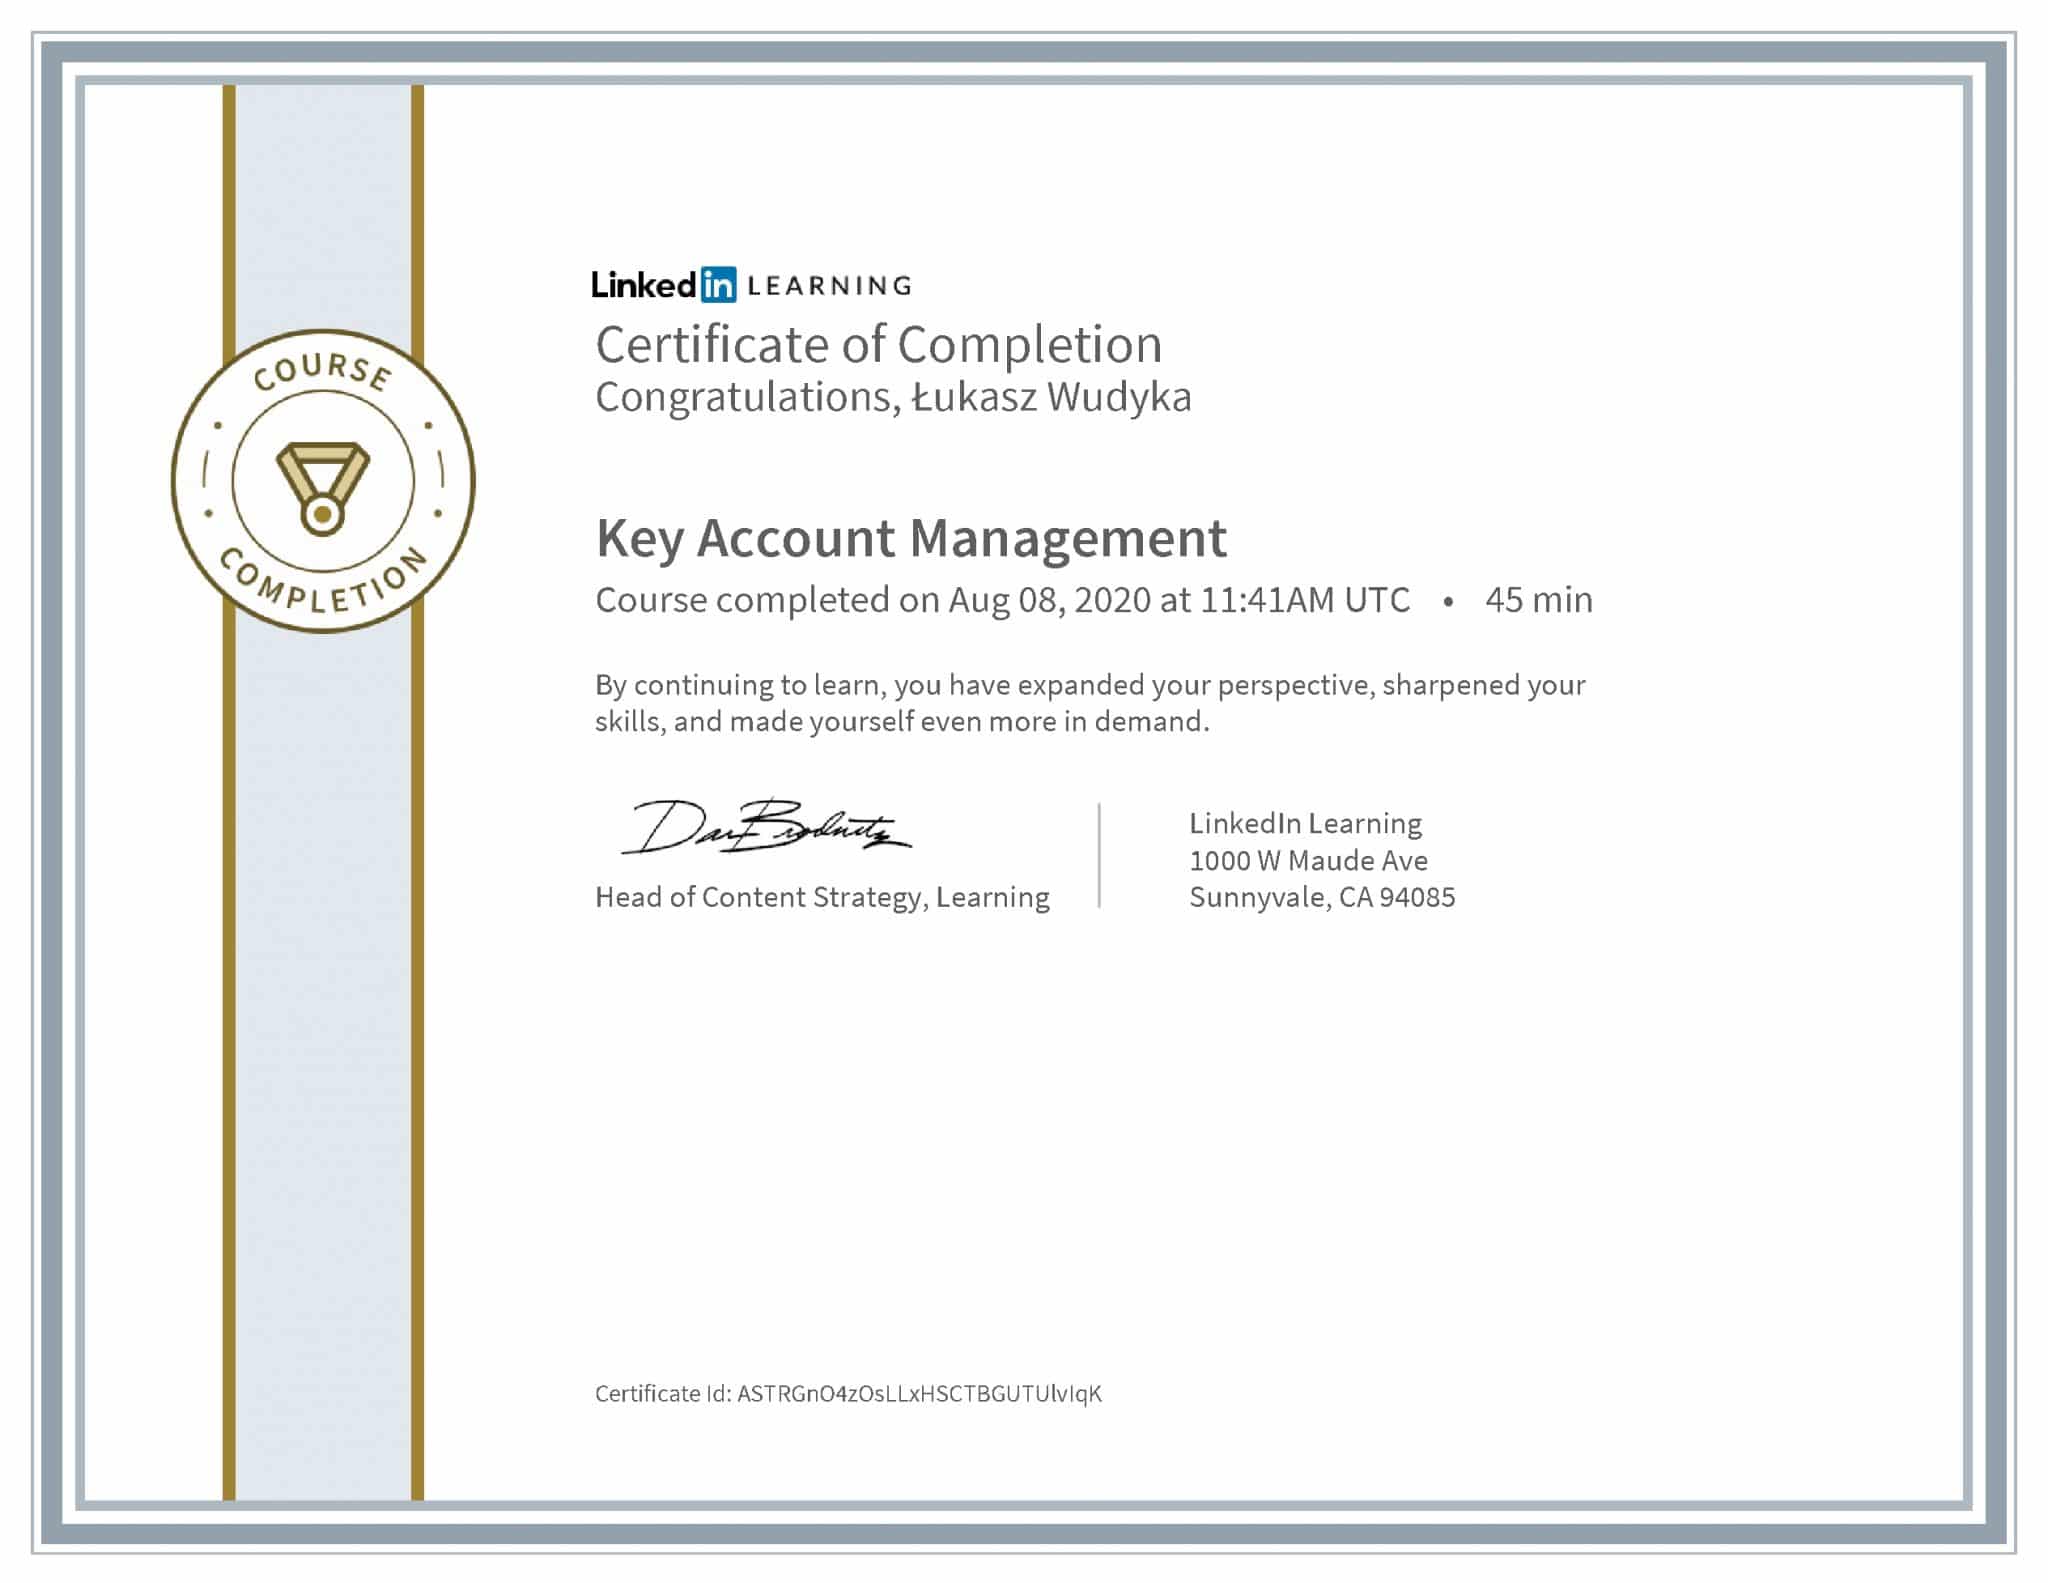 Łukasz Wudyka certyfikat LinkedIn Key Account Management